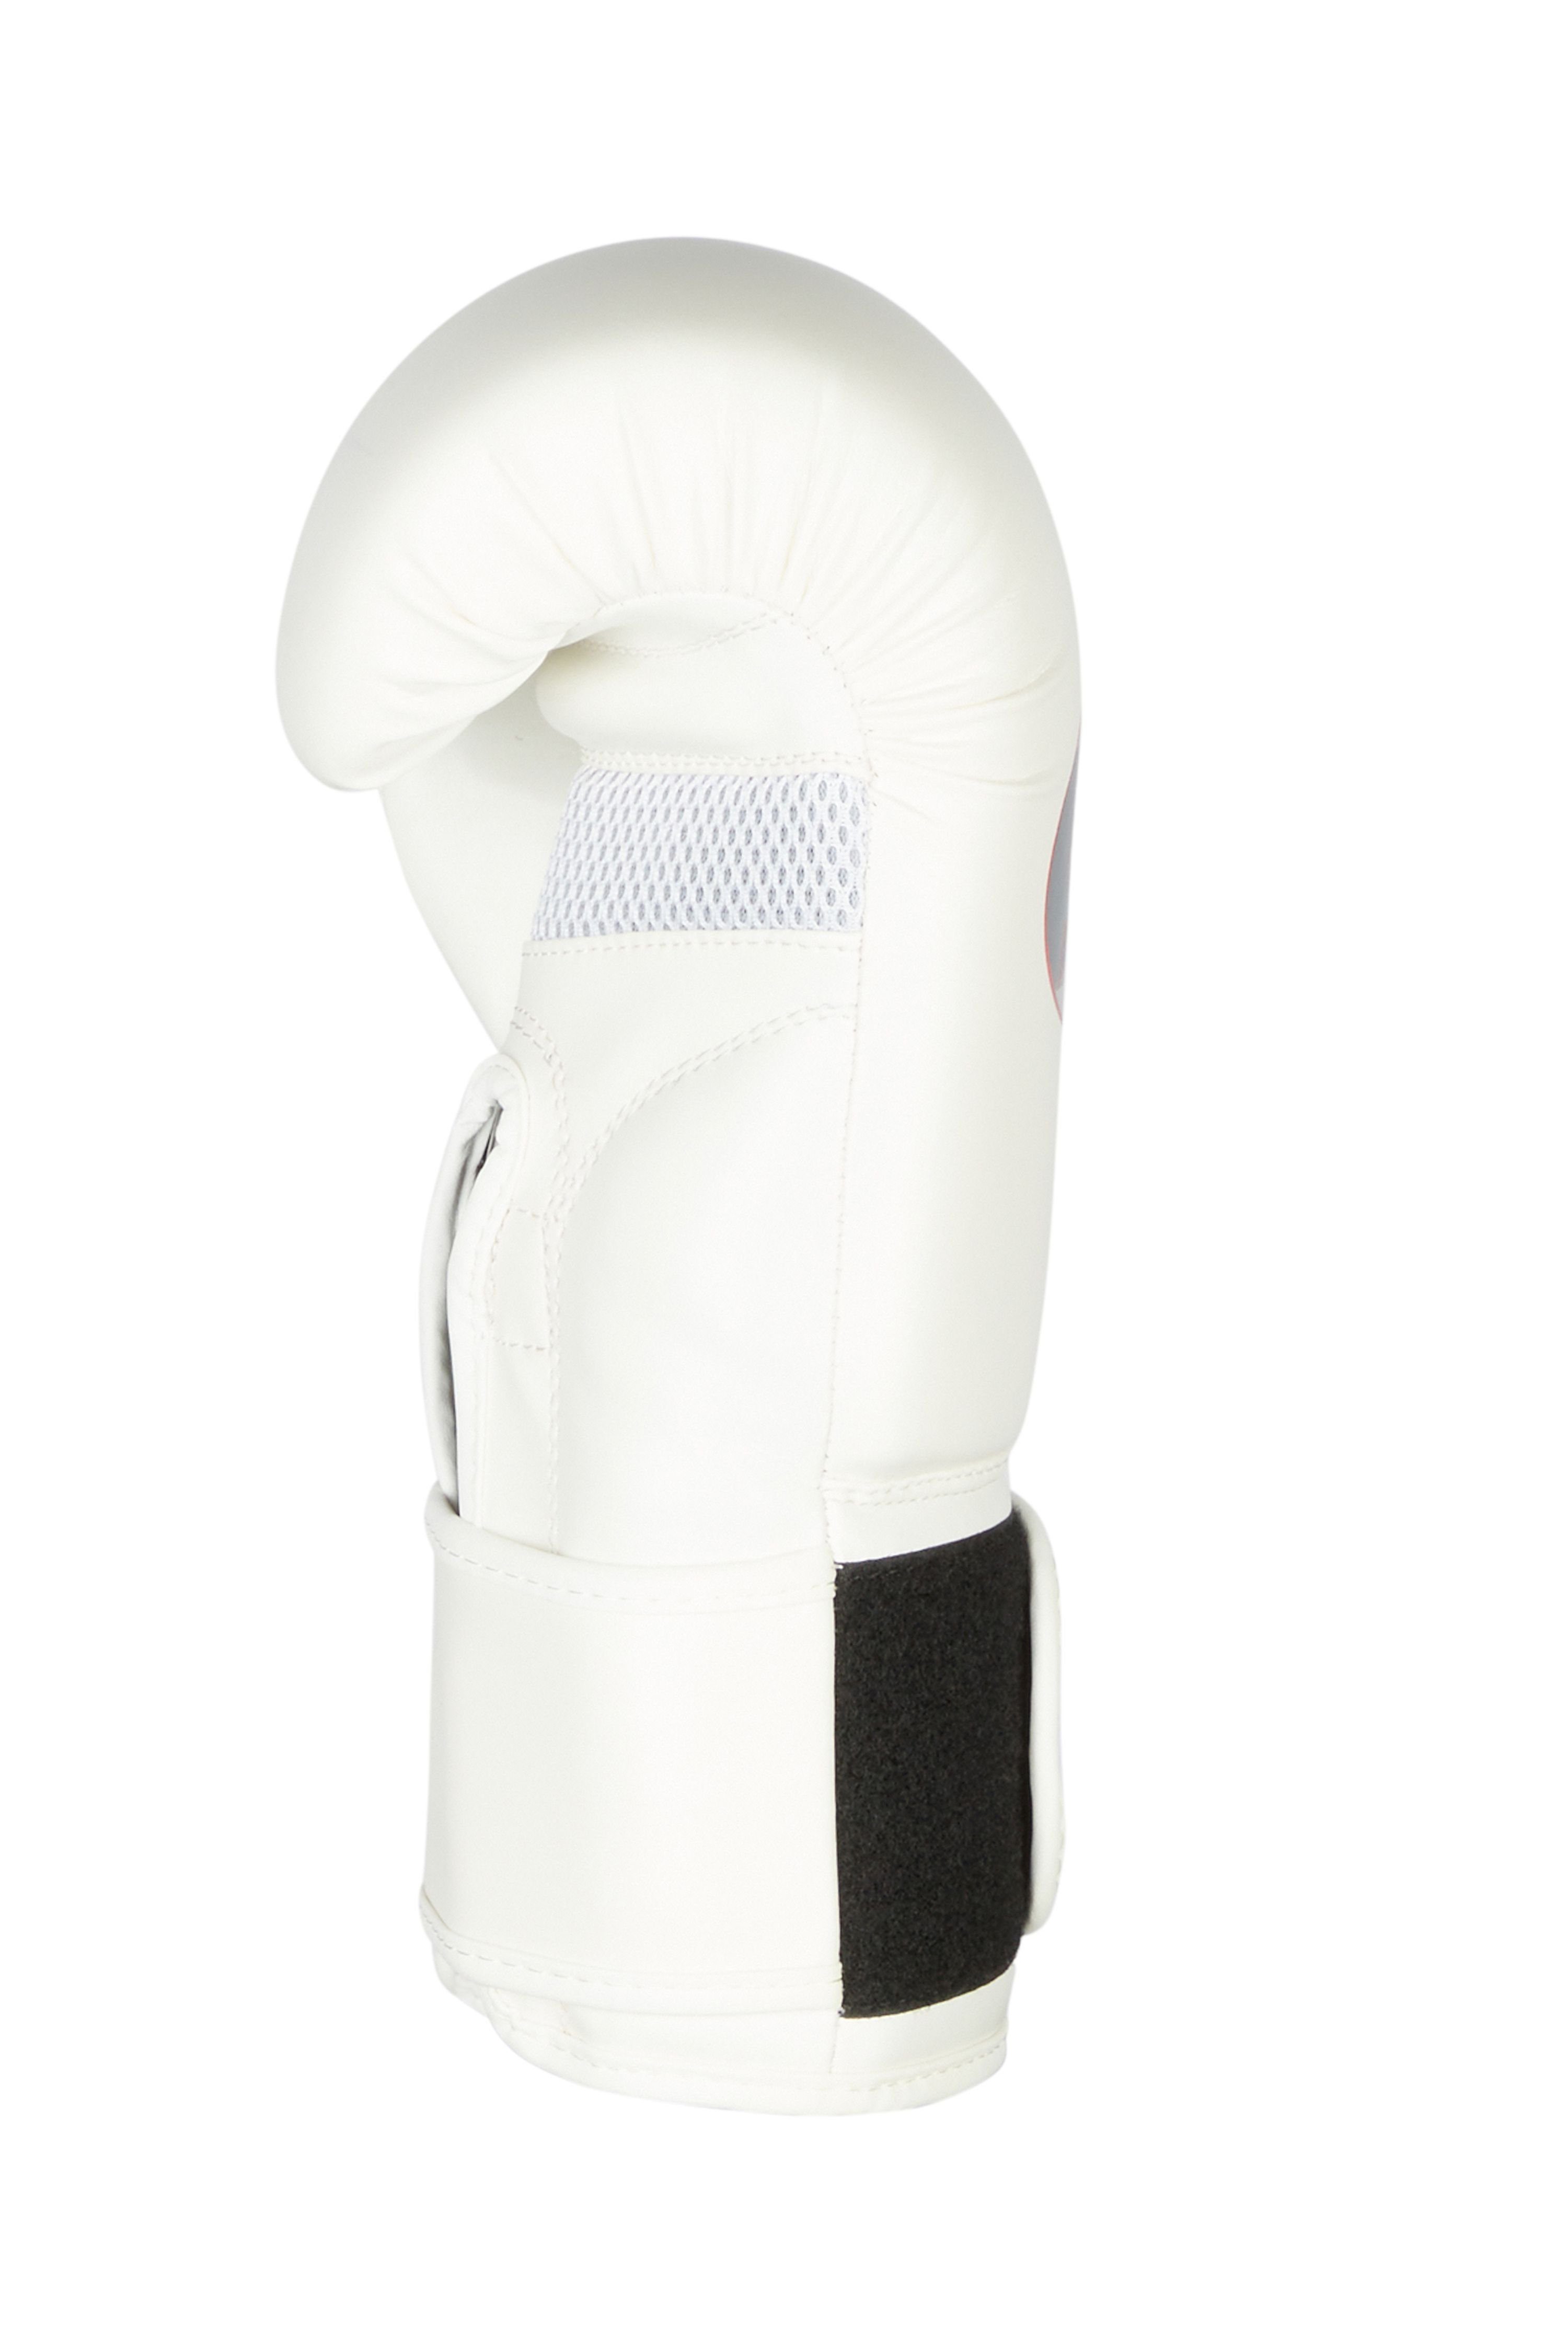 10 12 White Sparring, Boxen Boxhandschuhe Let´s Radiant BAY-Sports Unzen, Klett, Training, - - Mesh Fight 8 Kickboxen, Wettkampf weiß Box-Handschuhe